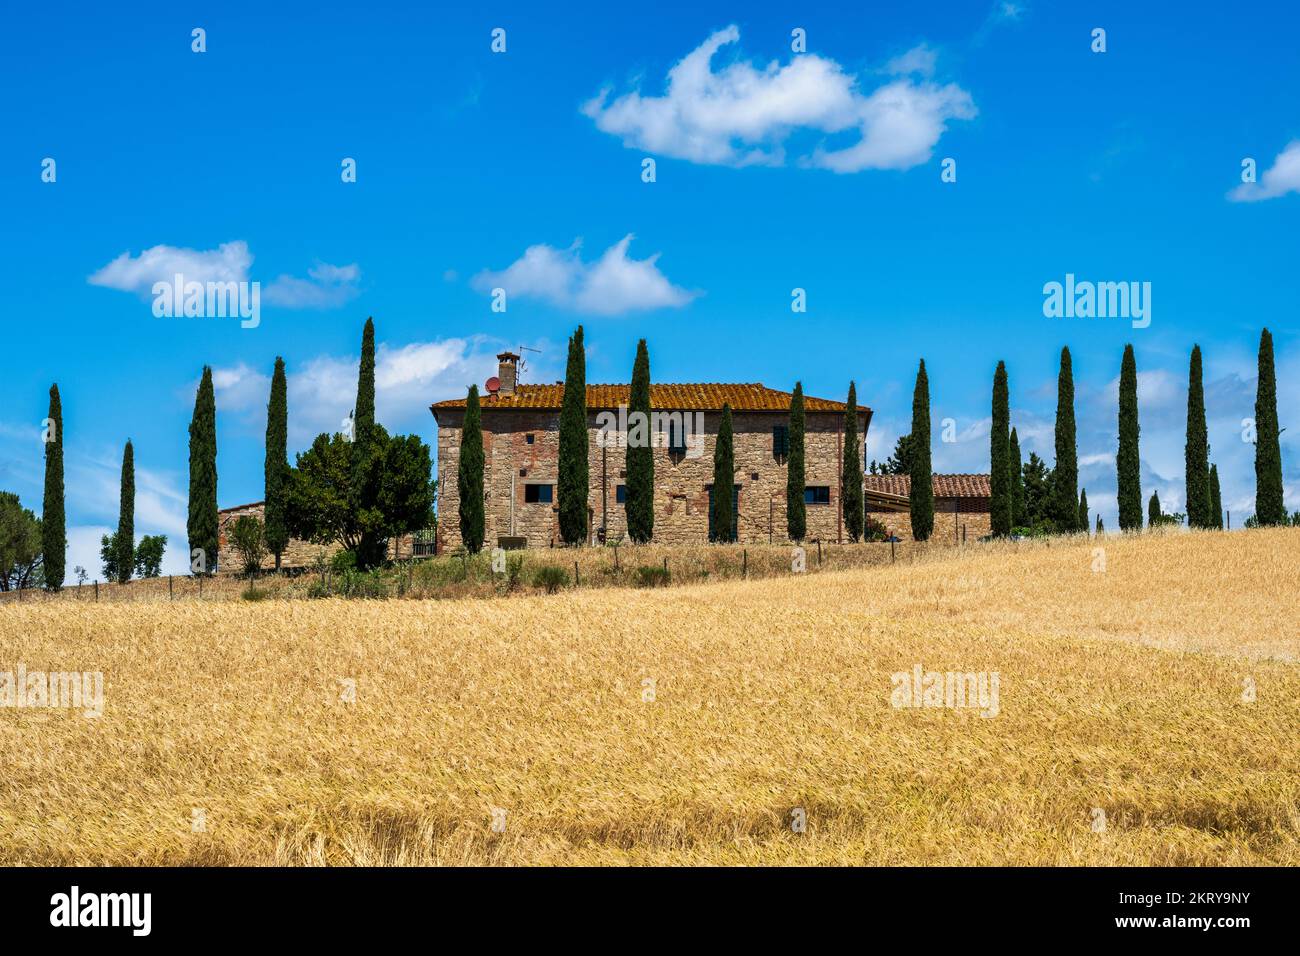 Tuscan stone farmhouse with cypress trees in the Crete Senesi near the town of Asciano, Province of Siena, Tuscany, Italy Stock Photo